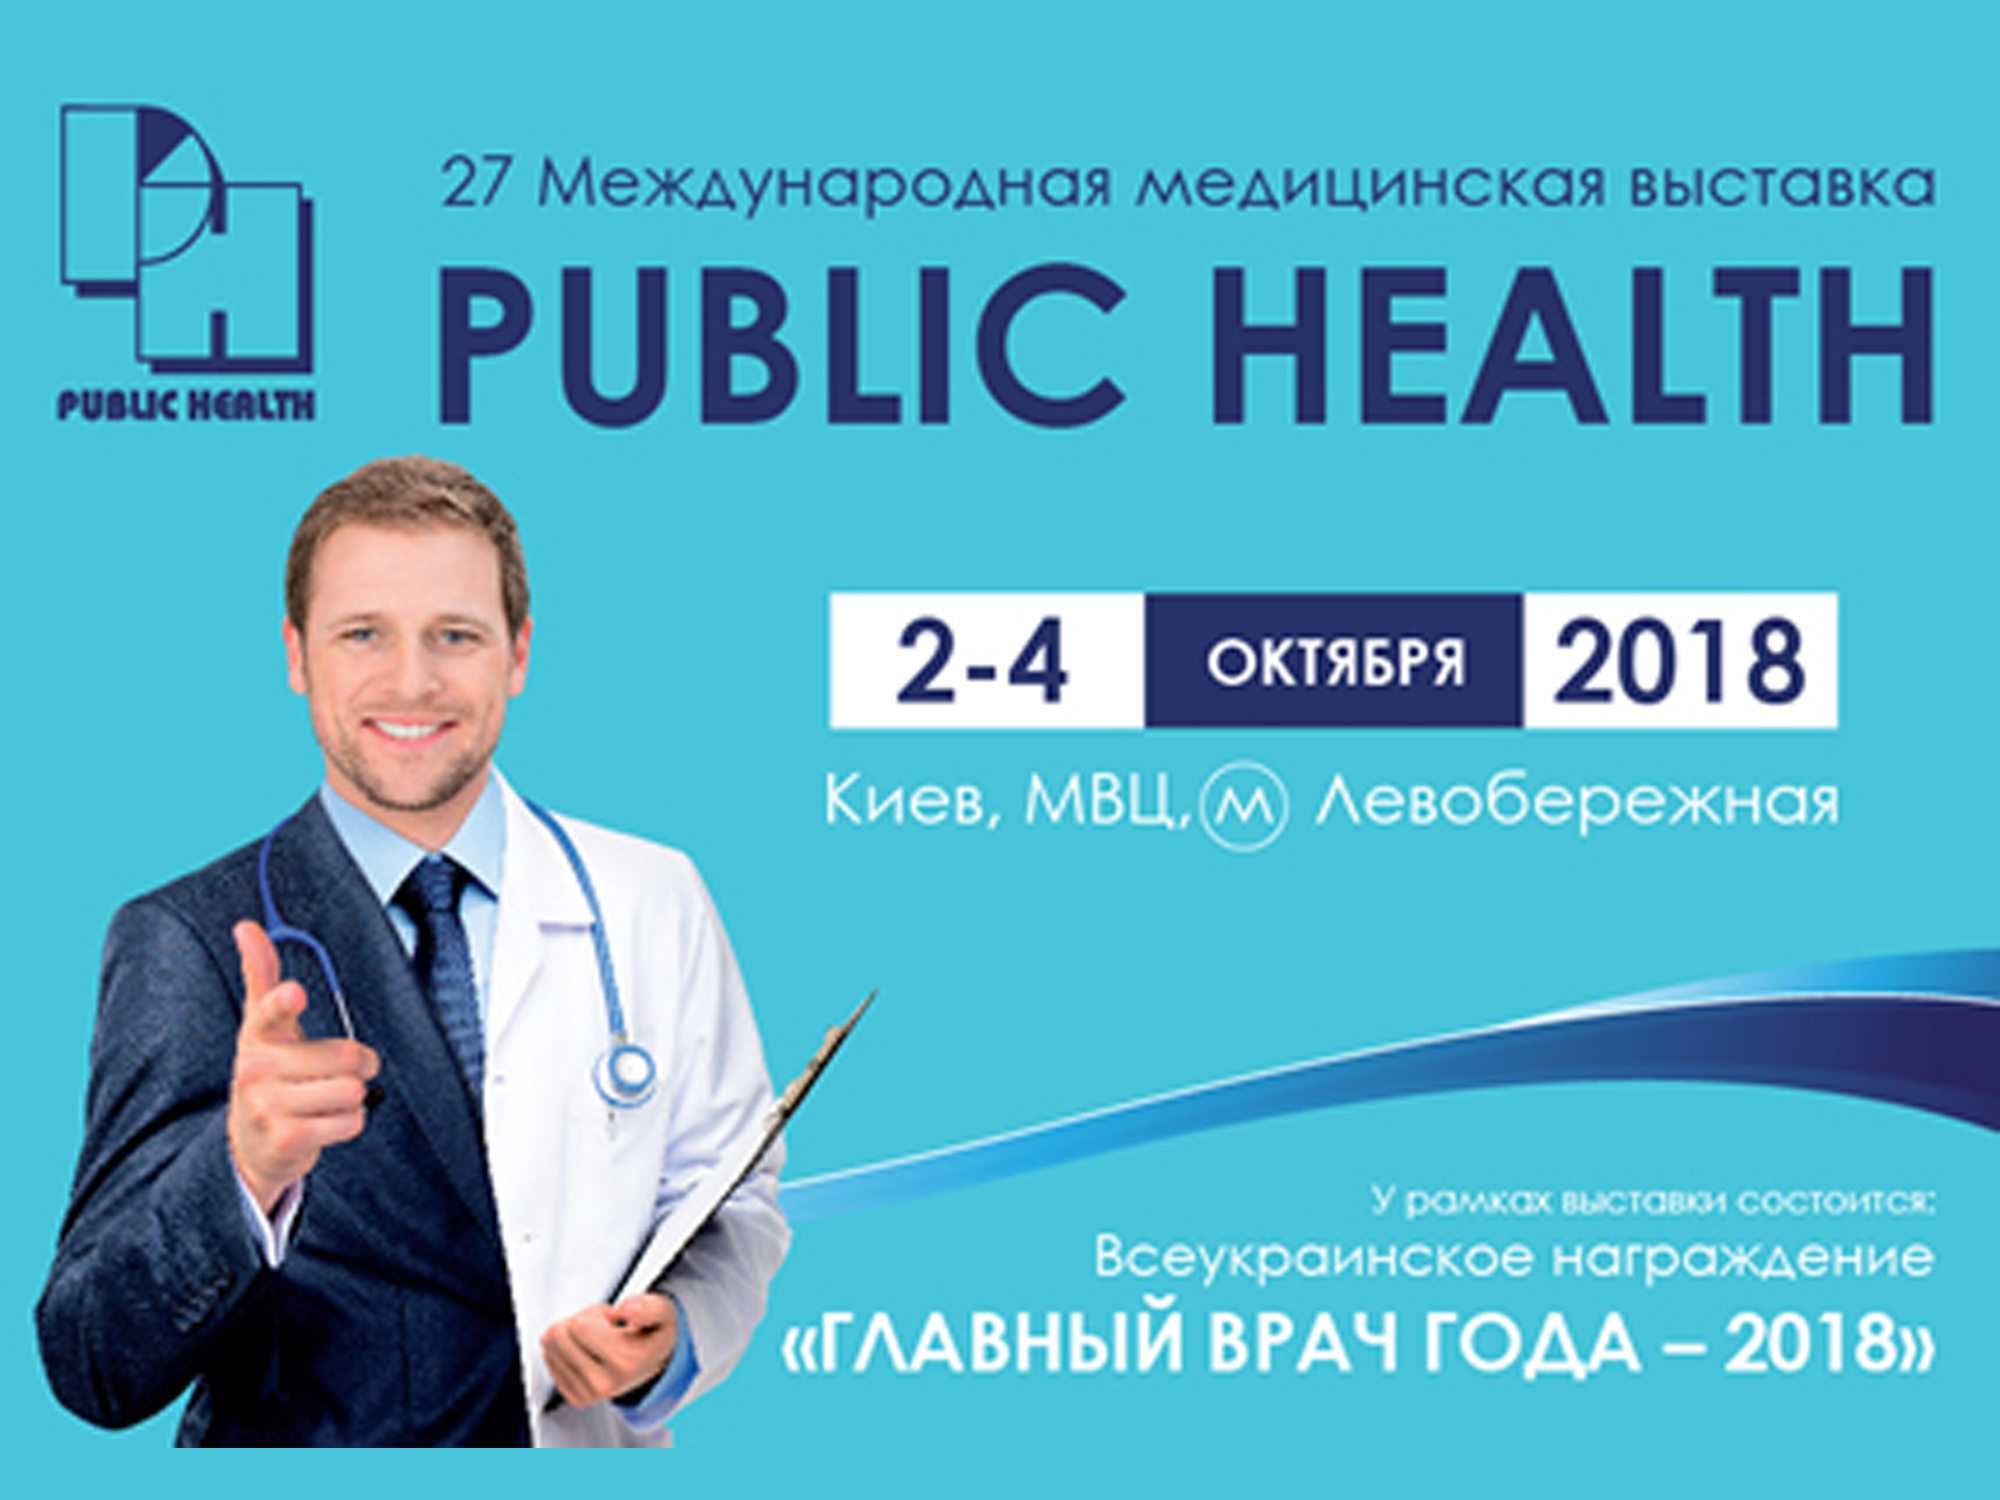 PUBLIC HEALTH 2018